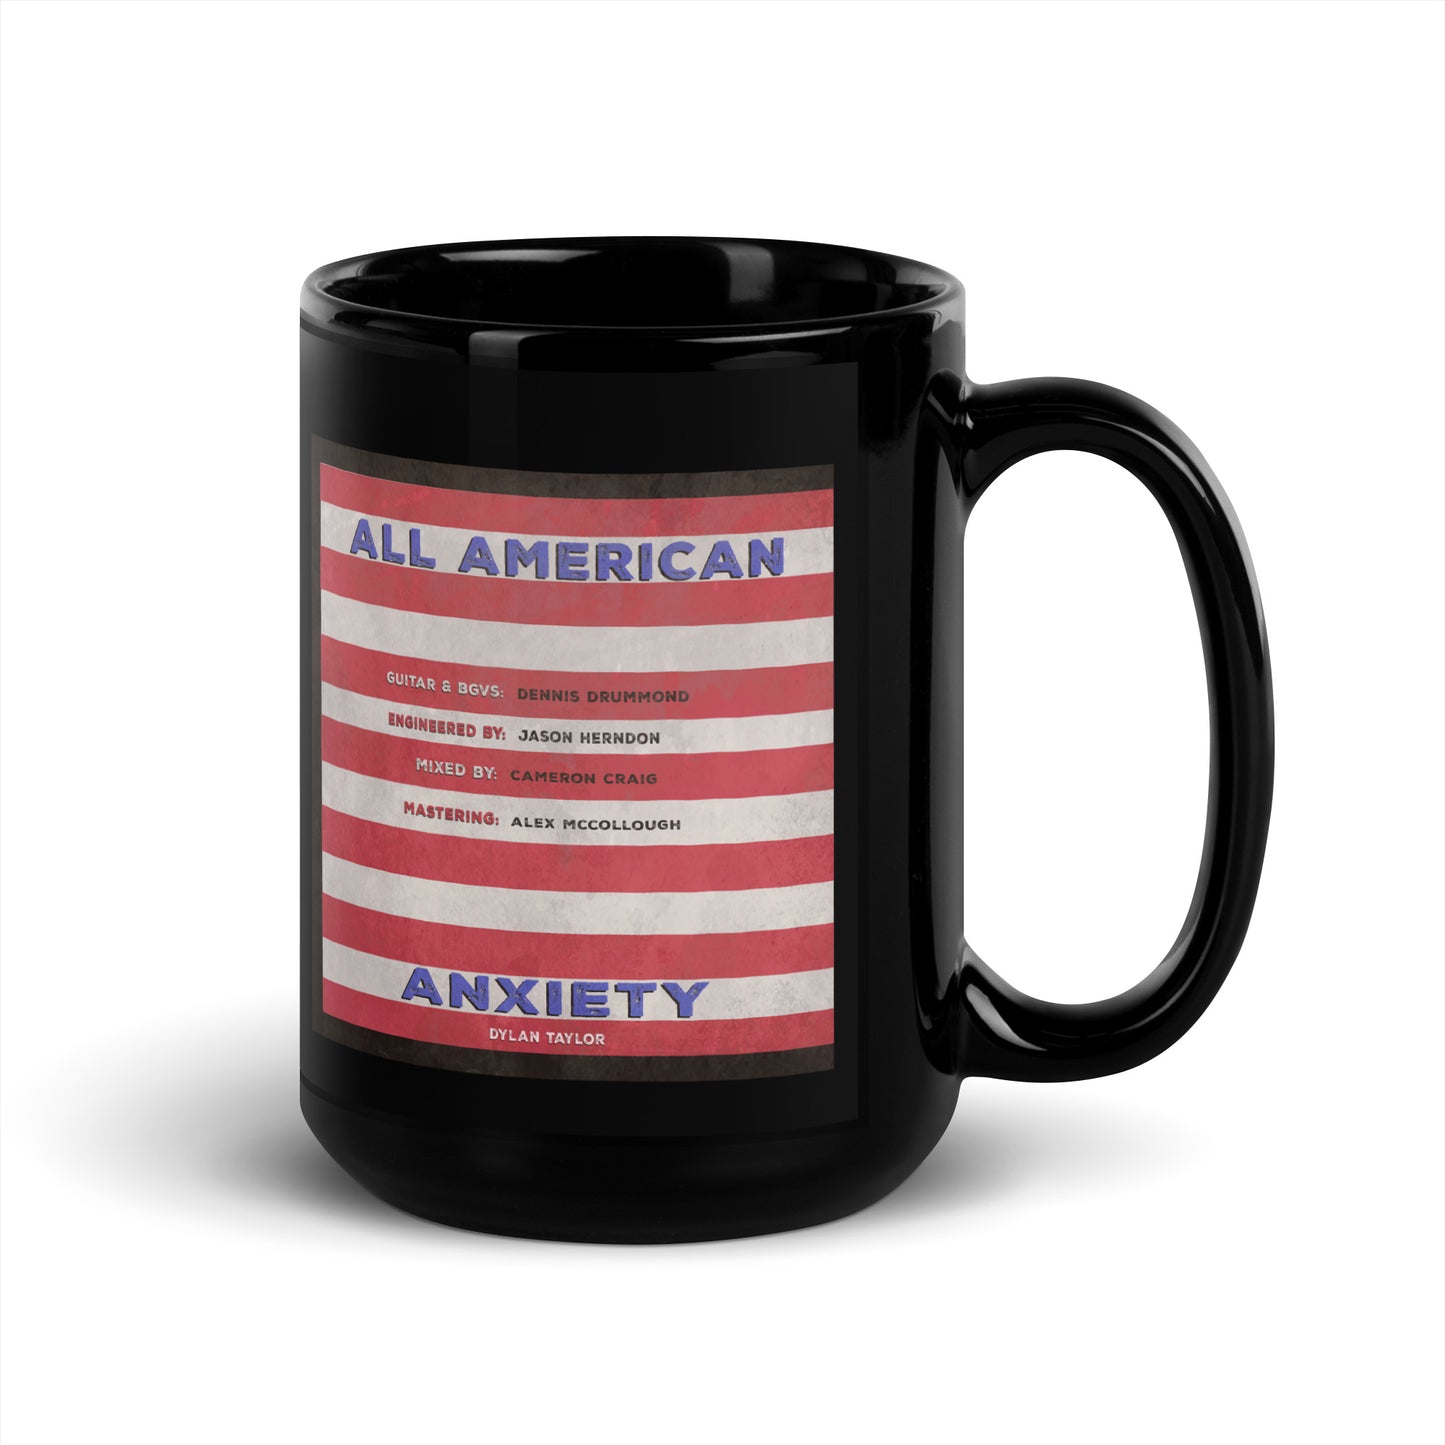 All American Anxiety Mug